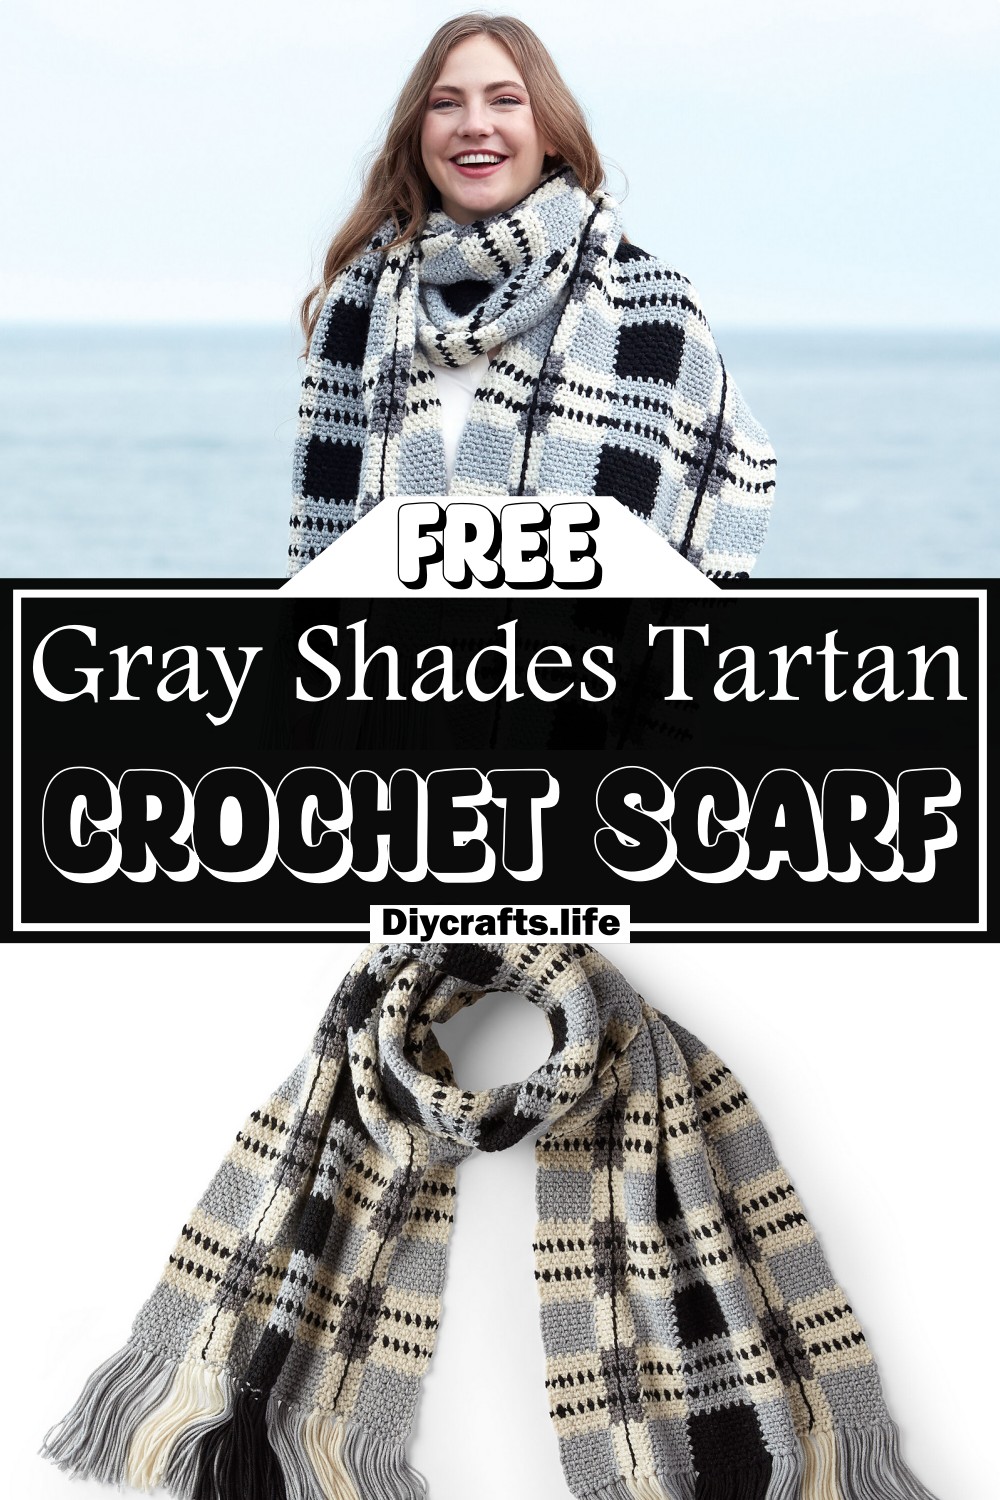 Crochet Gray Shades Tartan Scarf